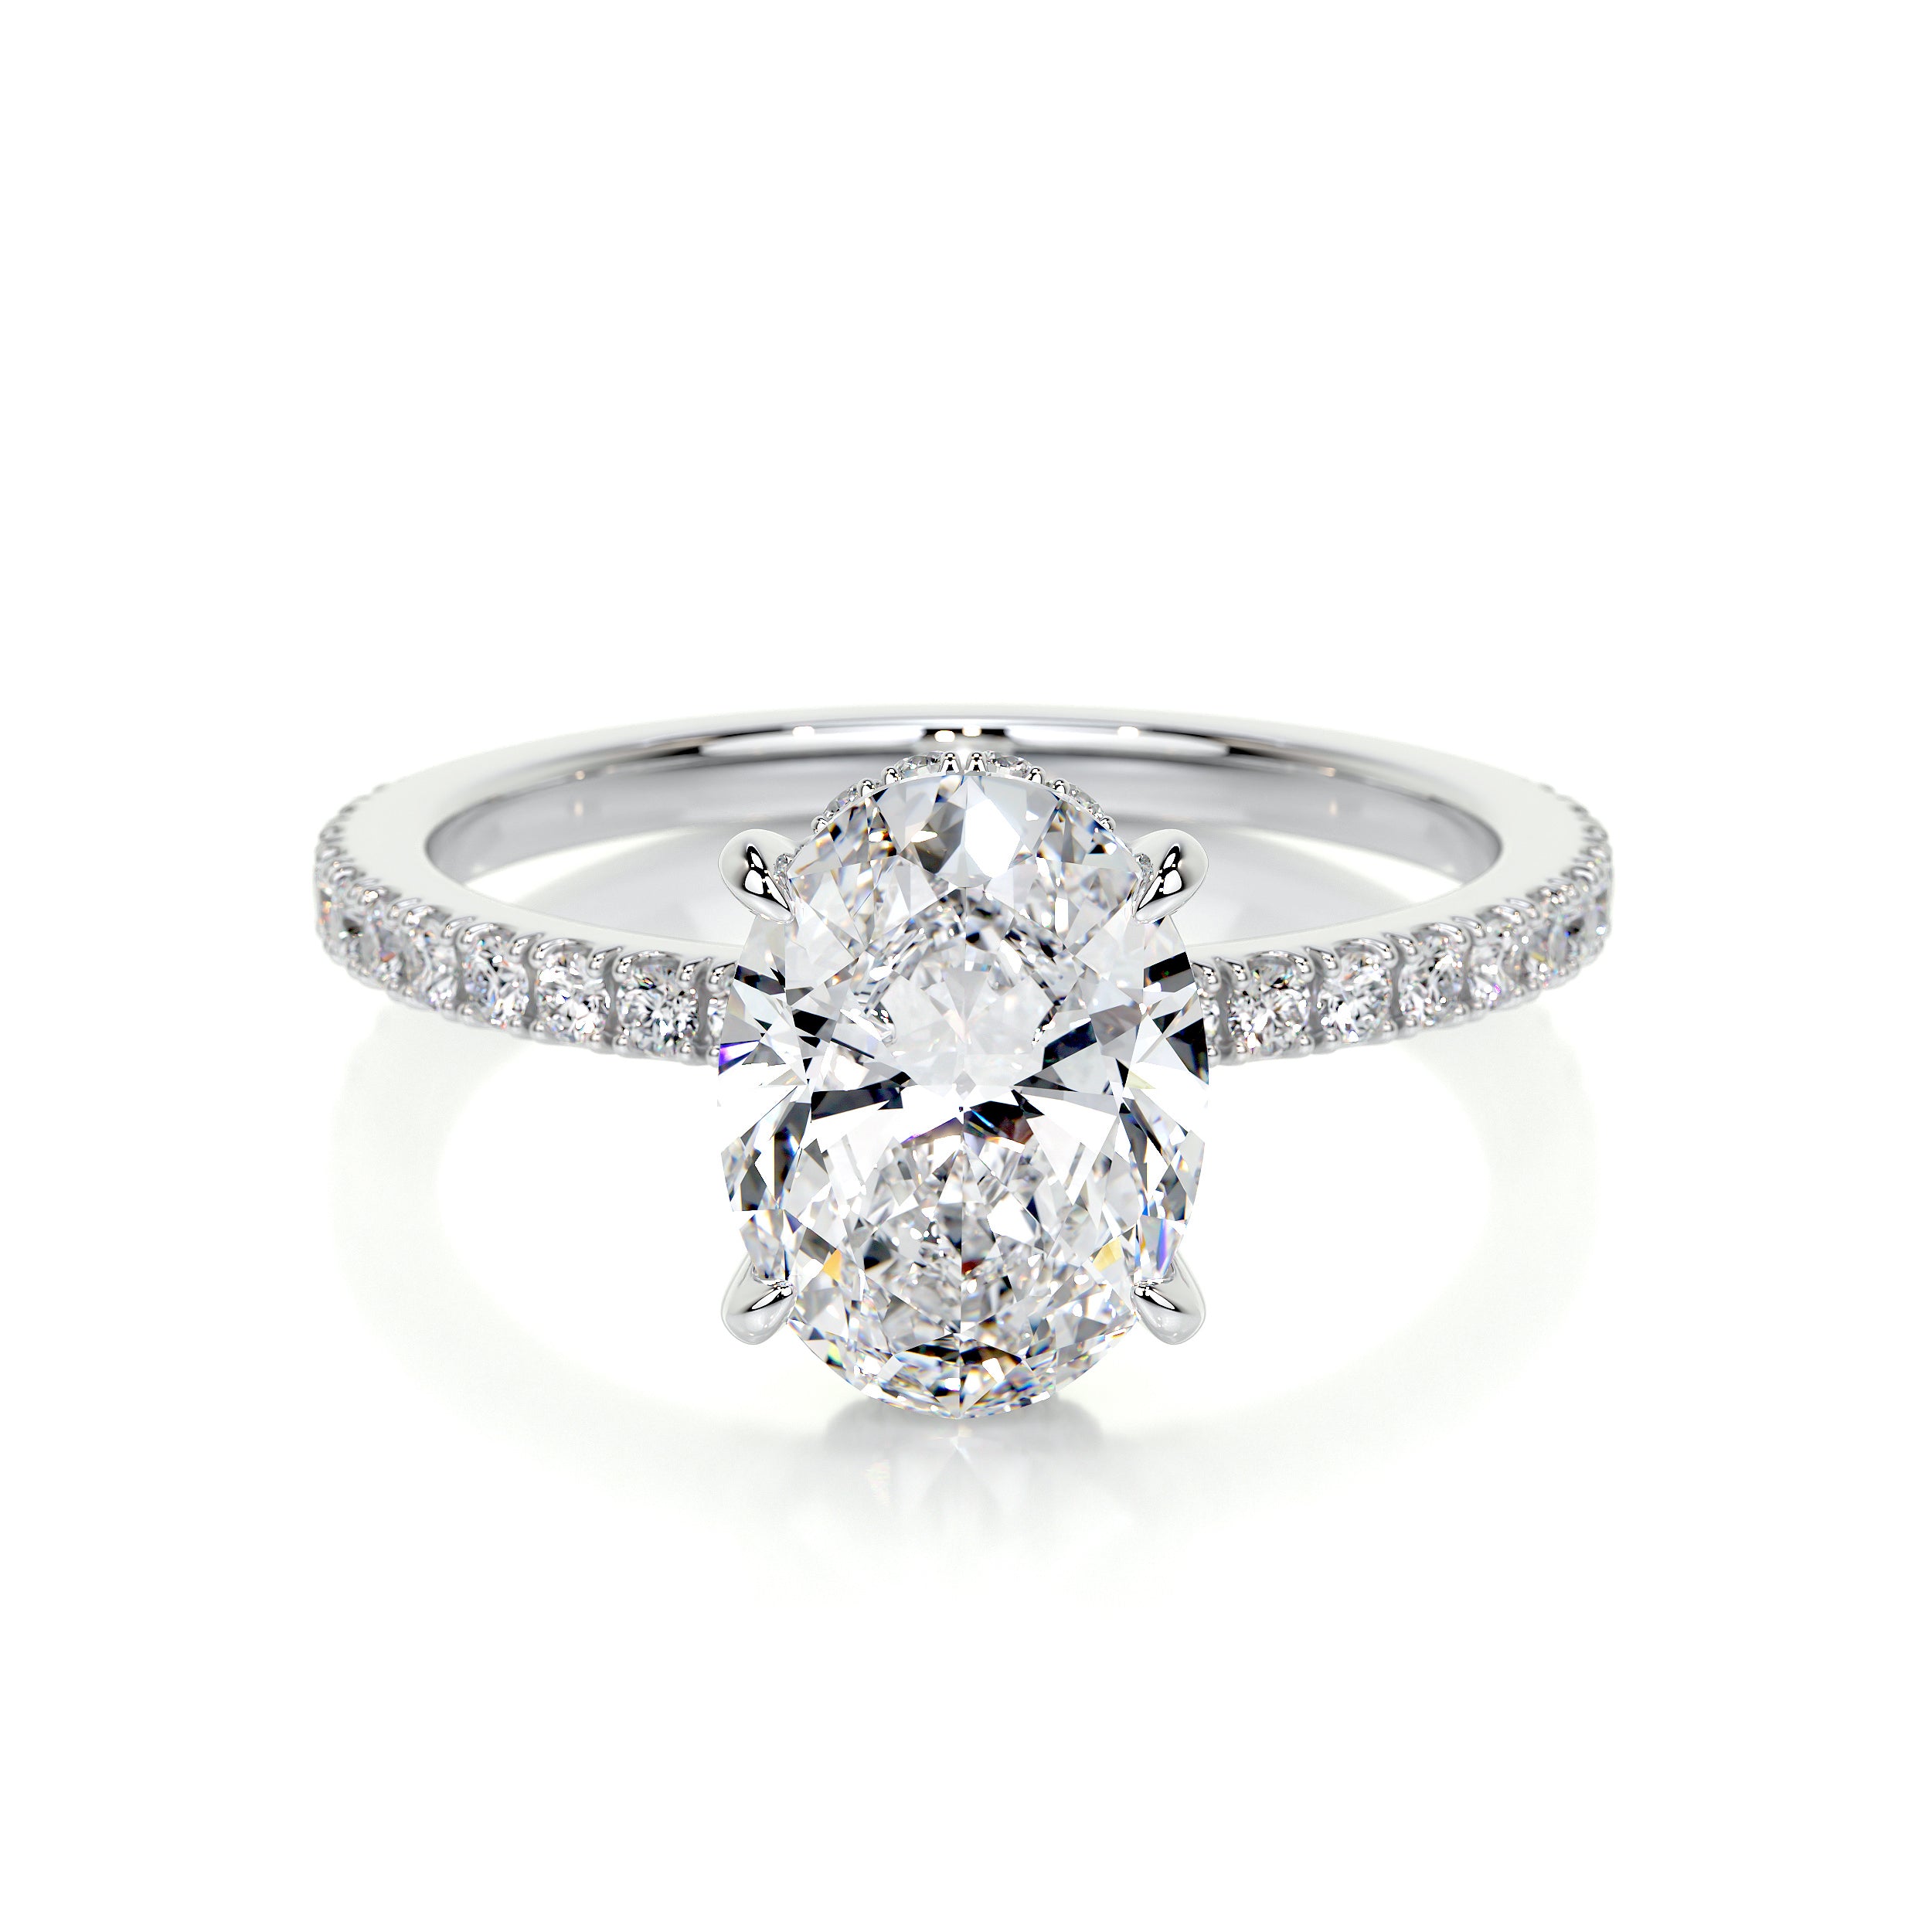 Buy SPARKLE Radiant Reverie Diamond Ring for Women, Girls, Loved One |  SJR23021-YELLOW-10 at Amazon.in